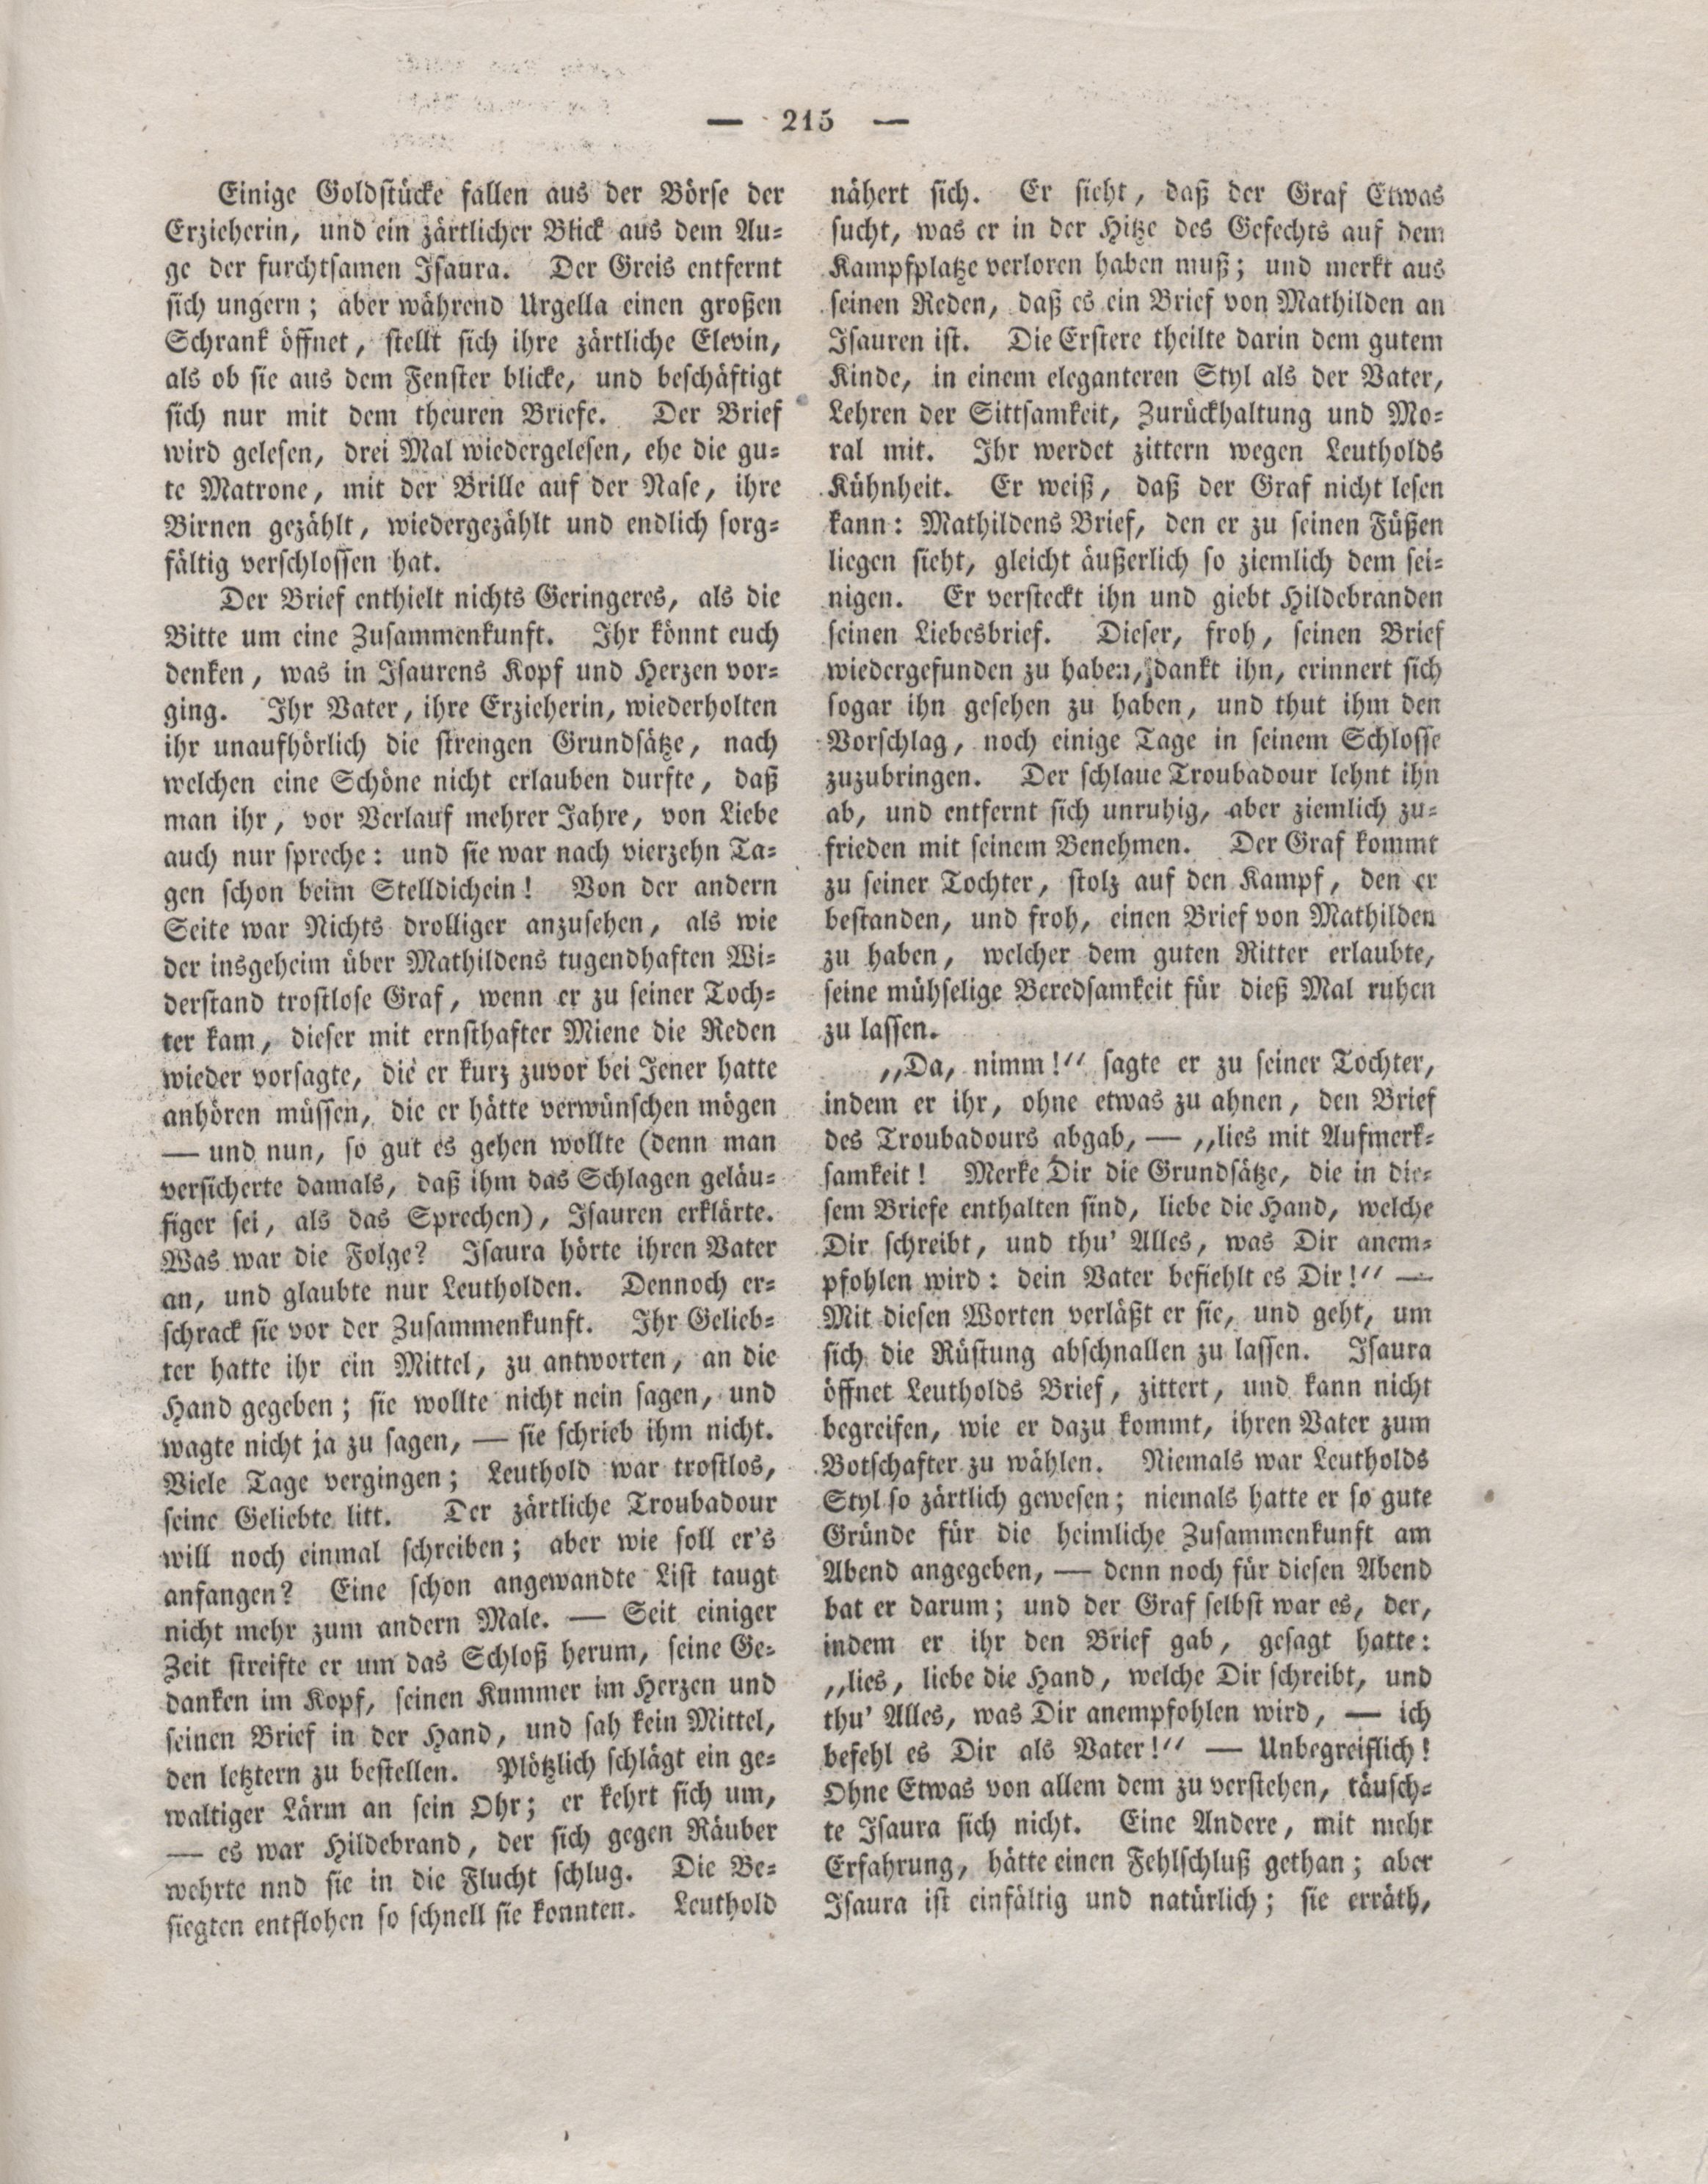 Der Refraktor [1836] (1836) | 216. (215) Main body of text